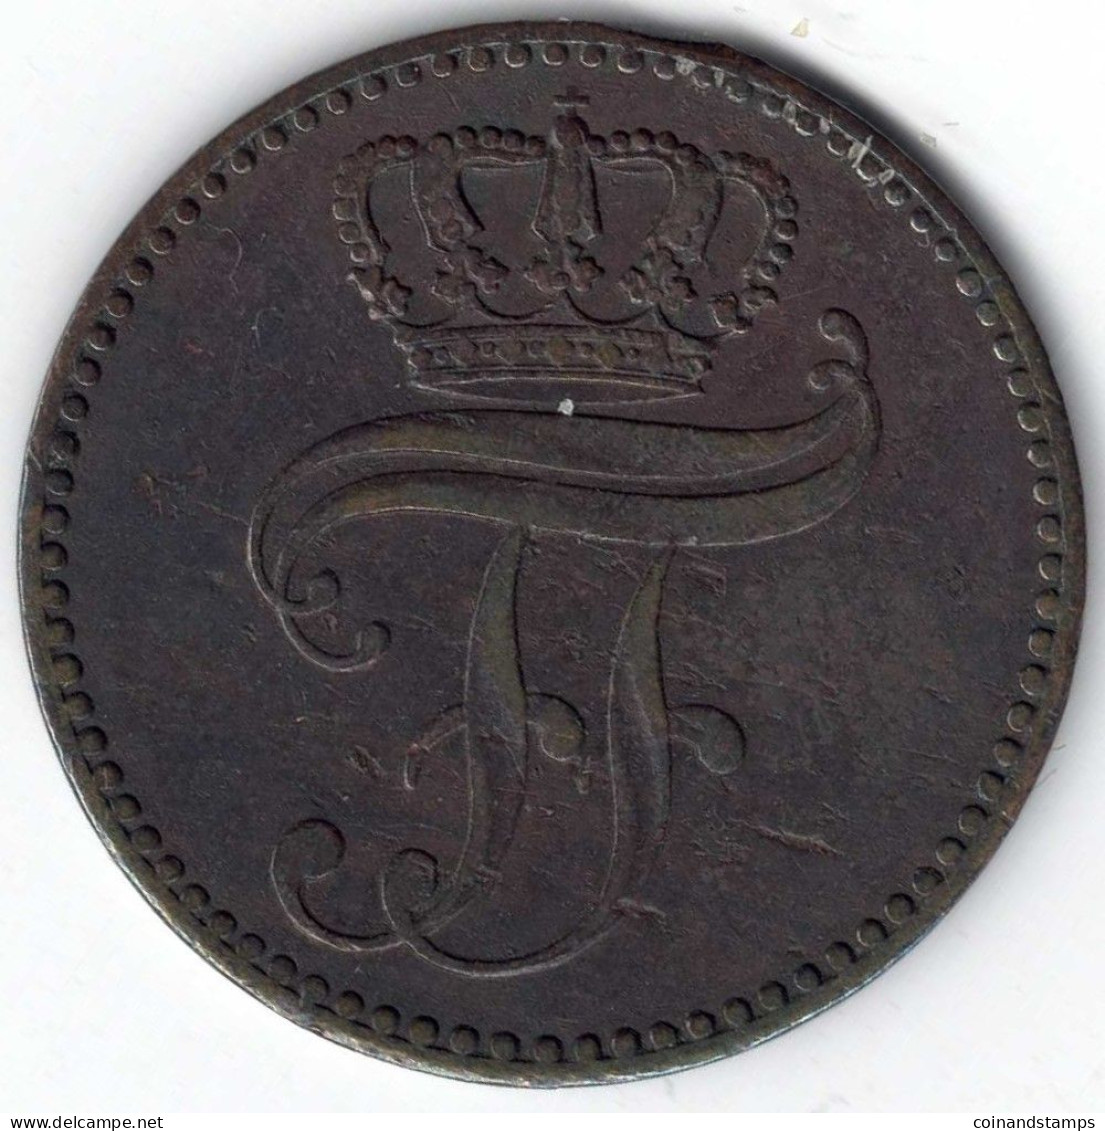 Meckl.-Schwerin Friedich Franz II. (1842-1883) 3 Pfennig 1852 A. (Cu.), Jaeger 56, AKS 48, Ss - Small Coins & Other Subdivisions